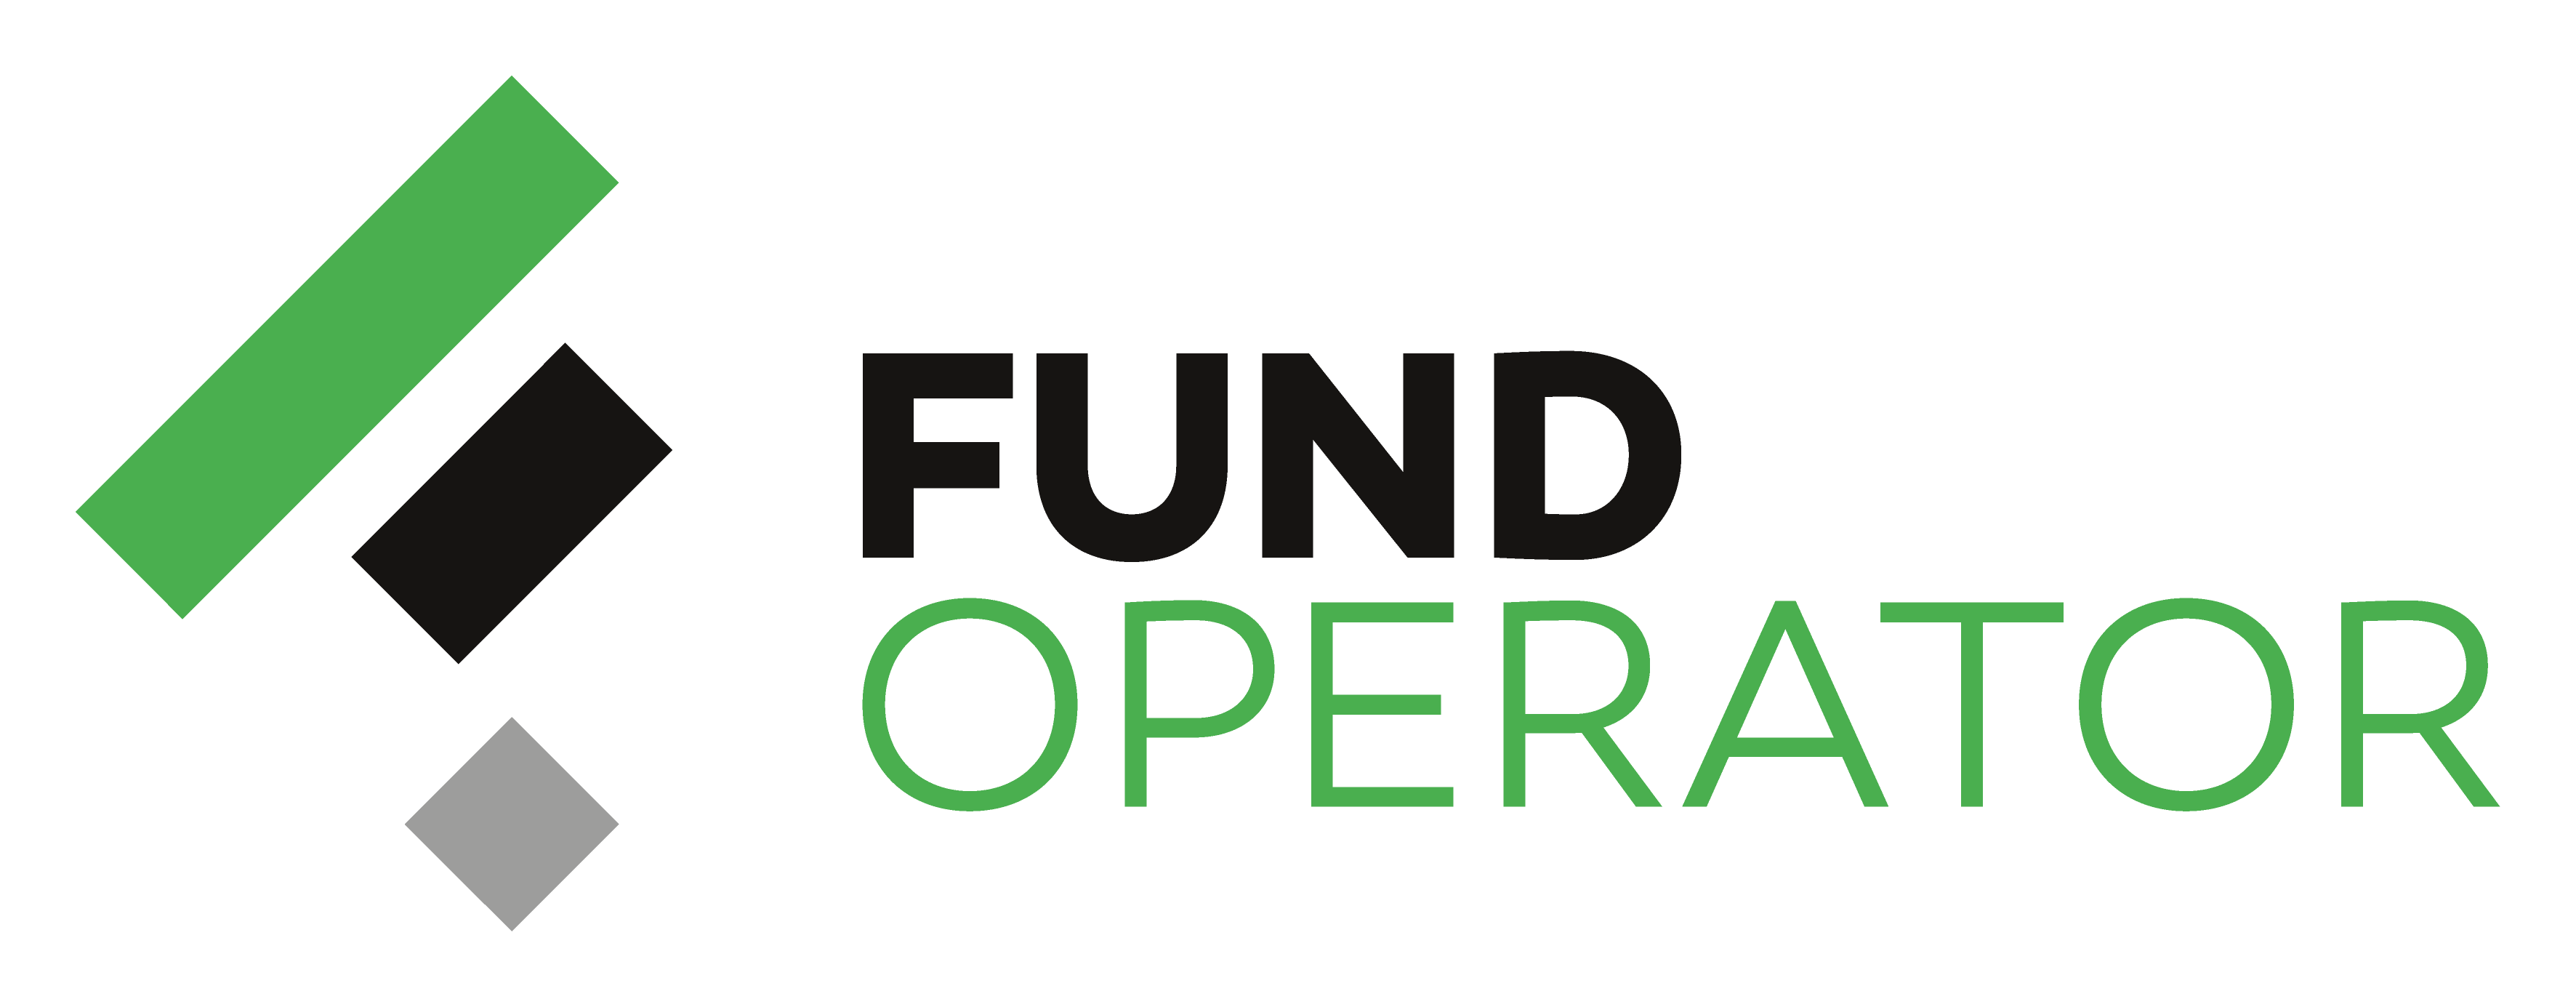 Fund Operator